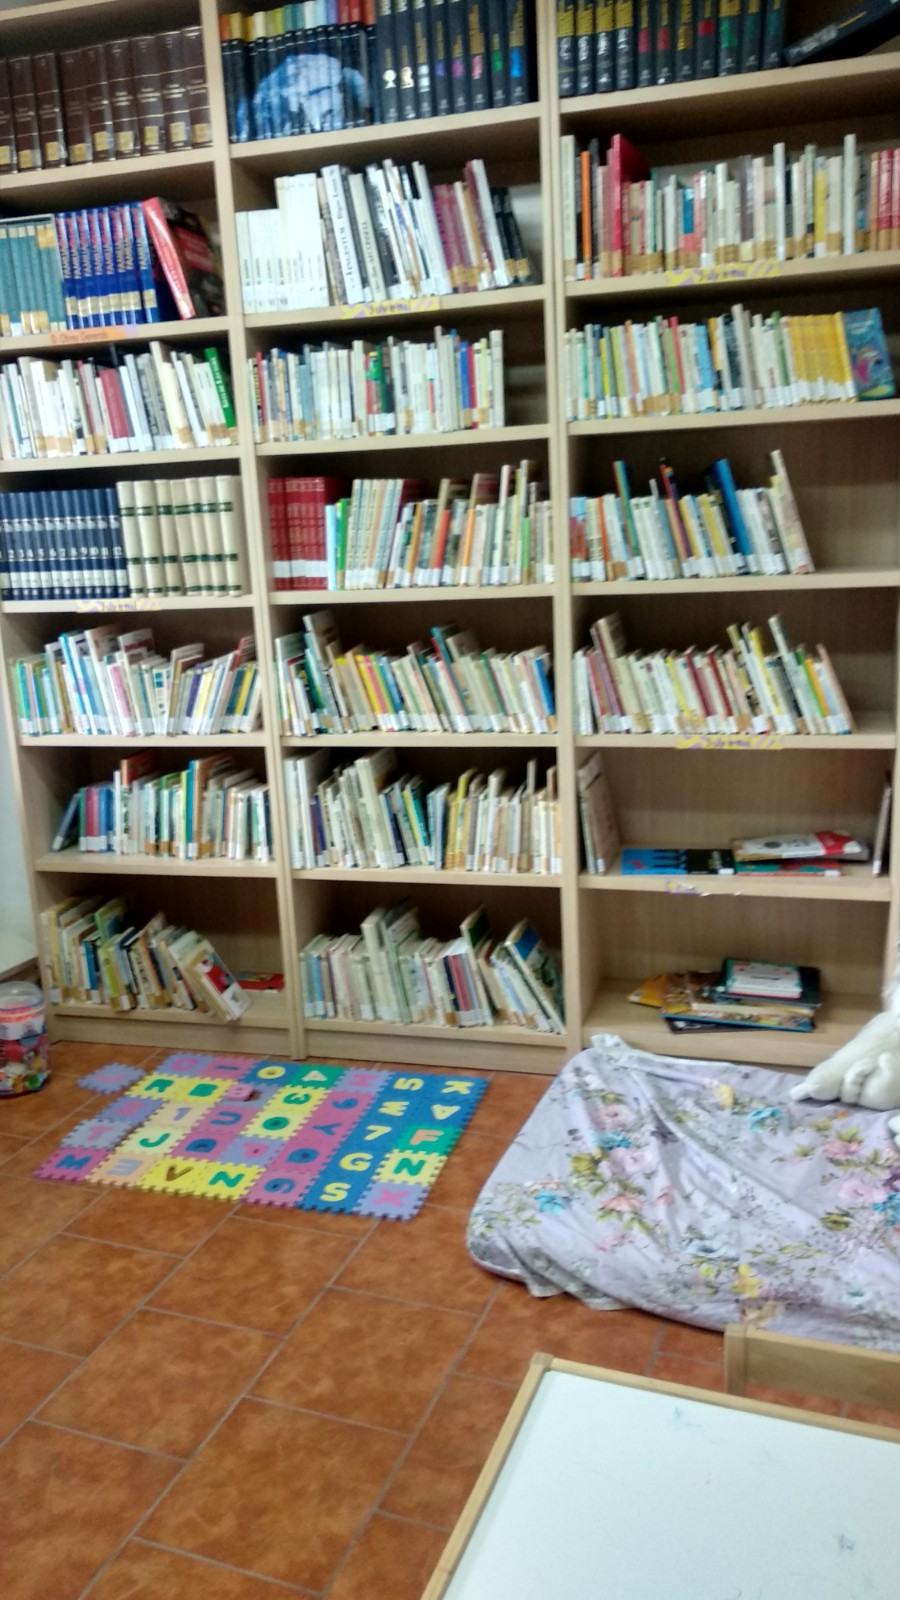 Agència de Lectura - Biblioteca municipal d'Agres